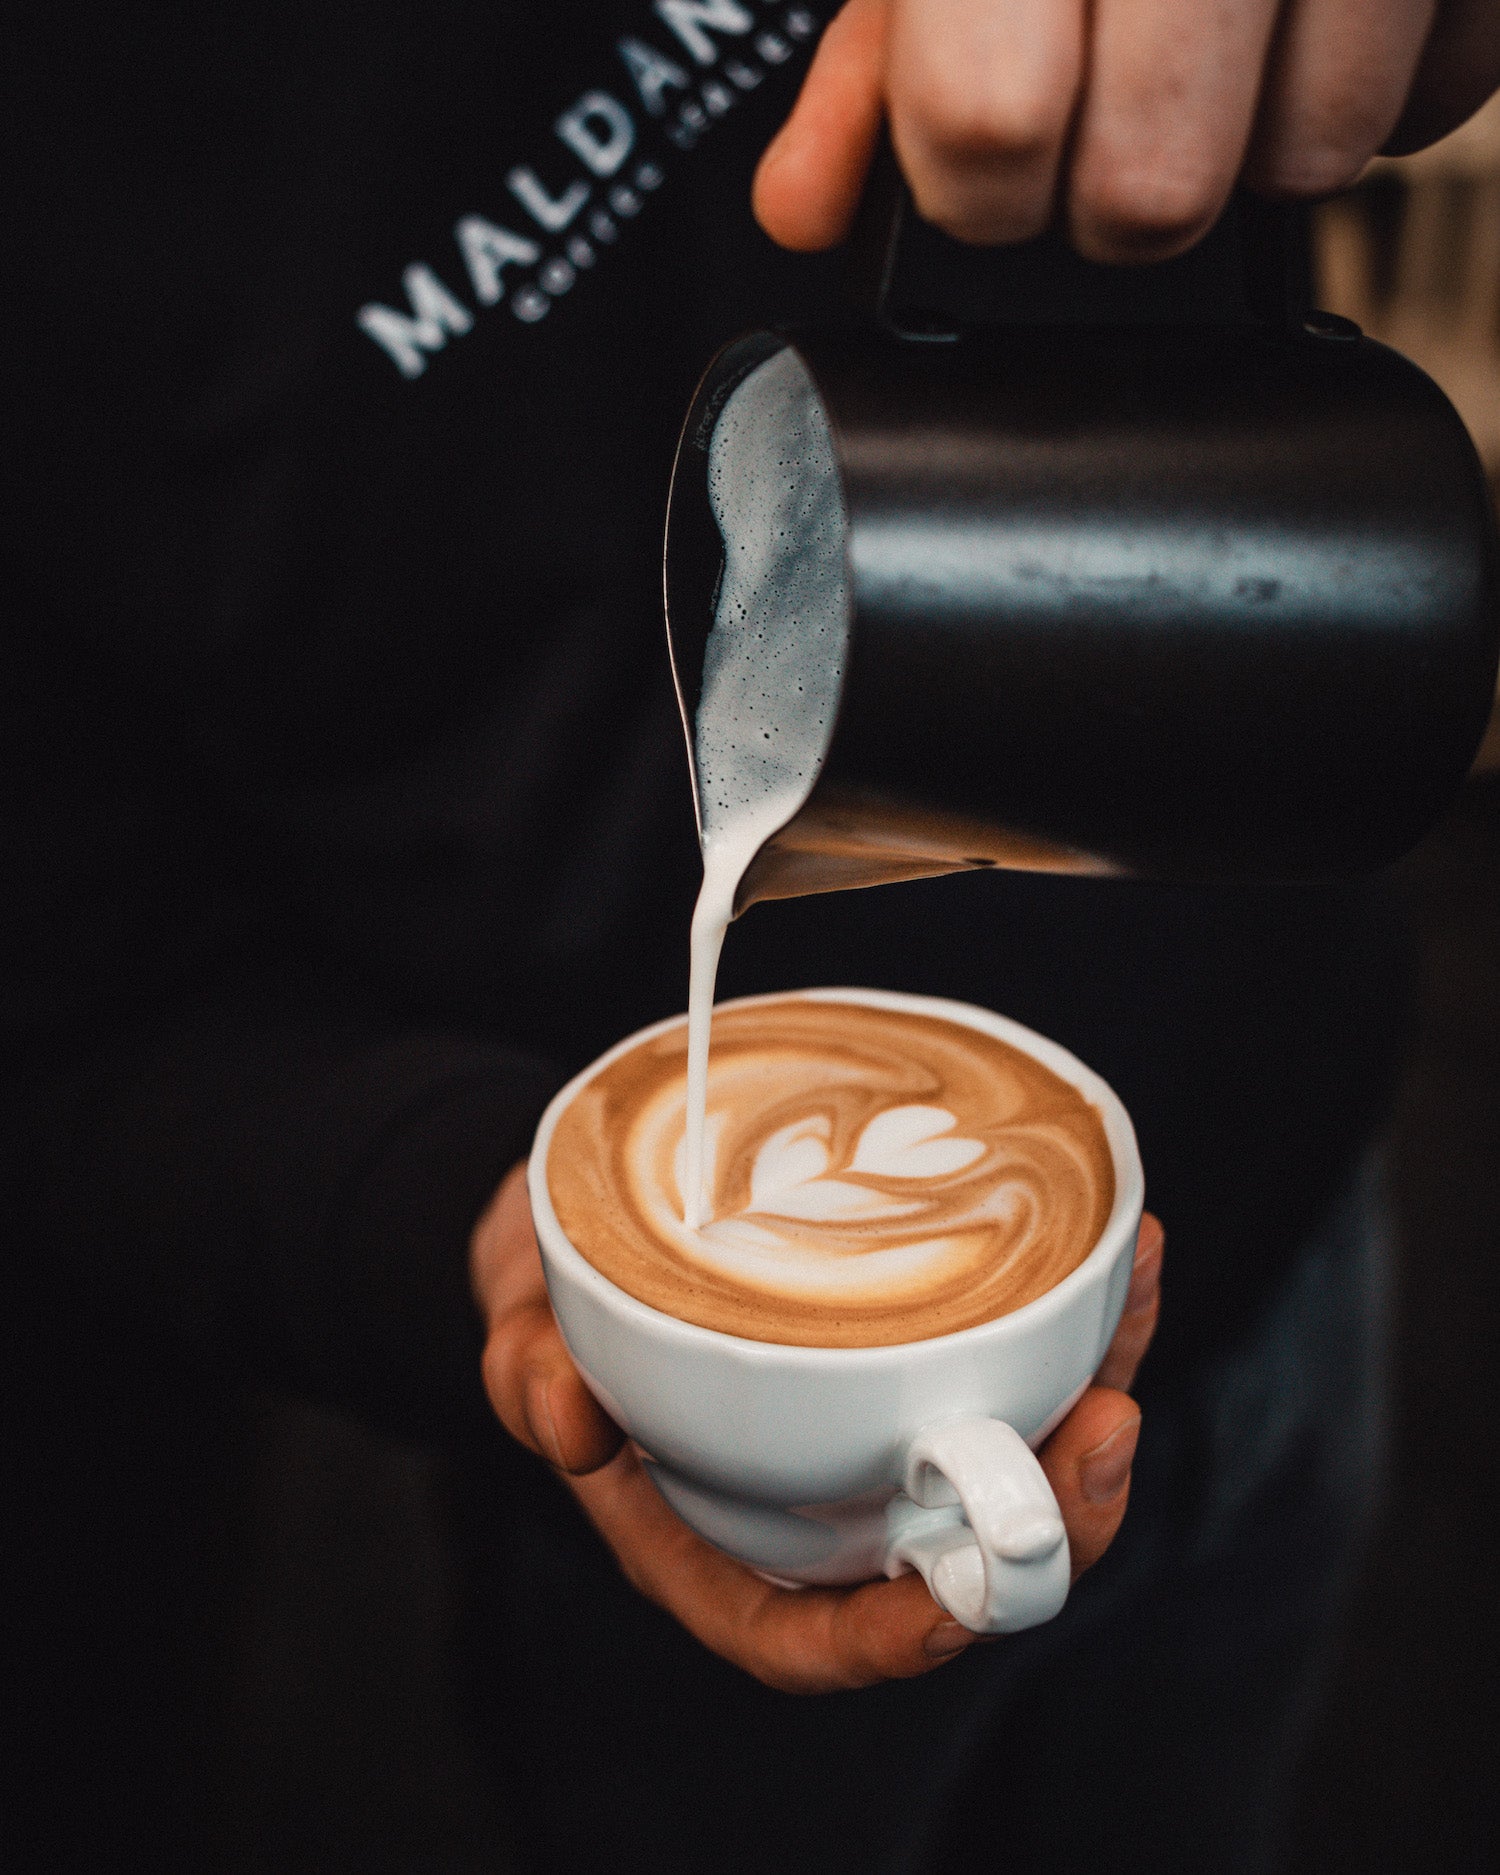 Latte art: a beginners guide to coffee art – Ueshima Coffee Company